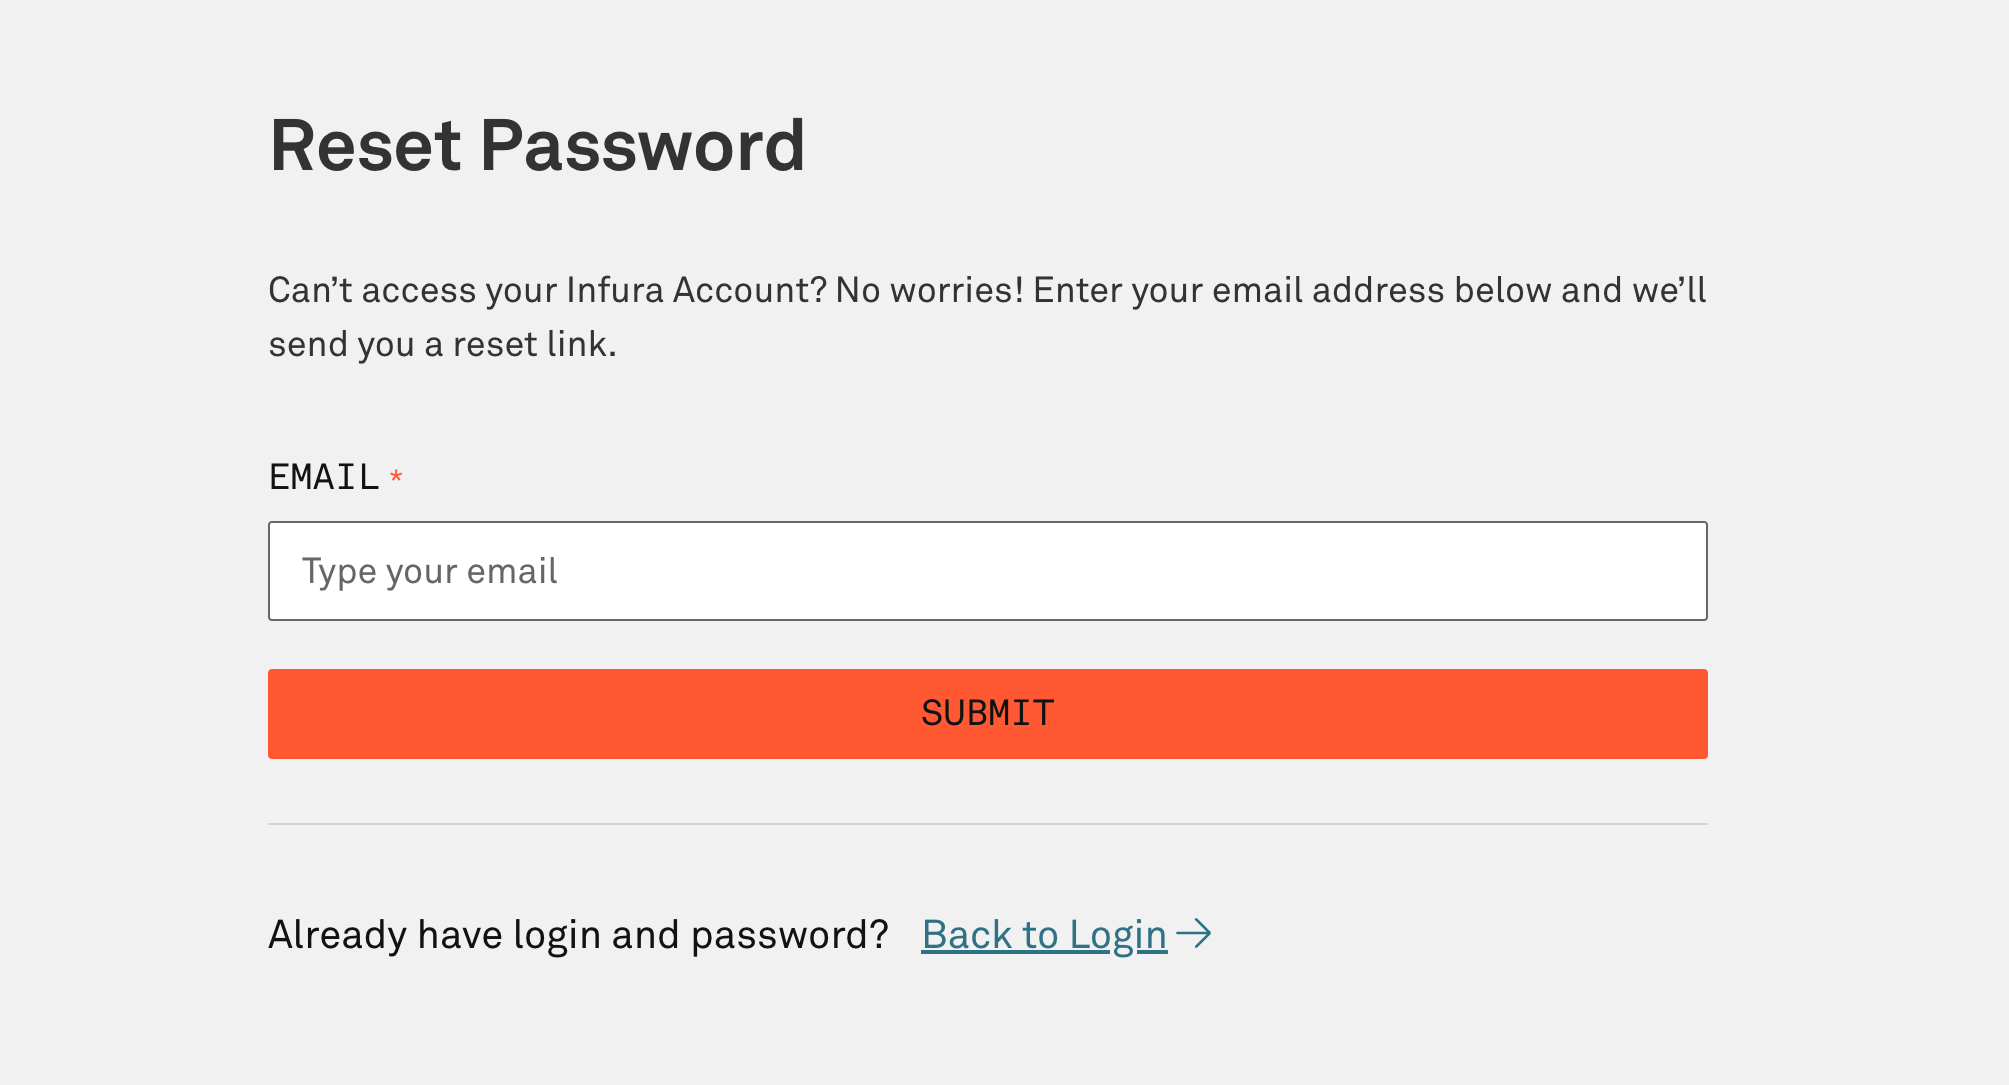 Reset password
form